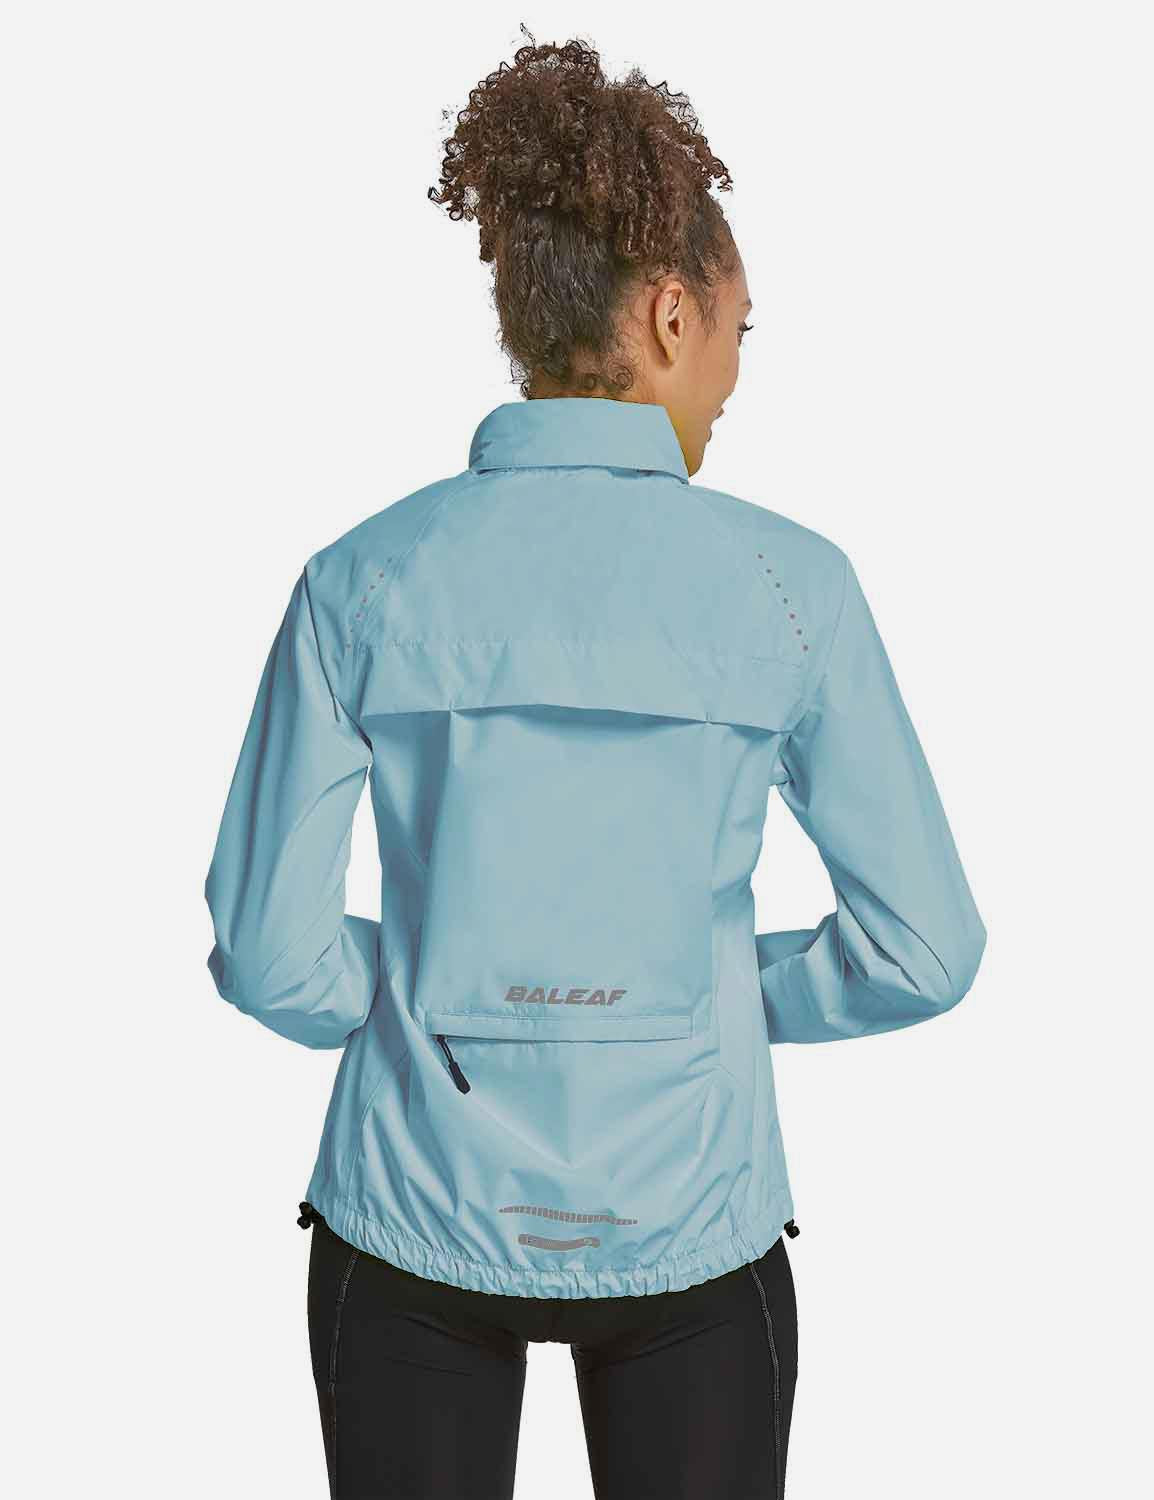 Baleaf Women's Waterproof Lightweight Full-Zip Pocketed Cycling Jacket aaa468 Ethereal Blue Back